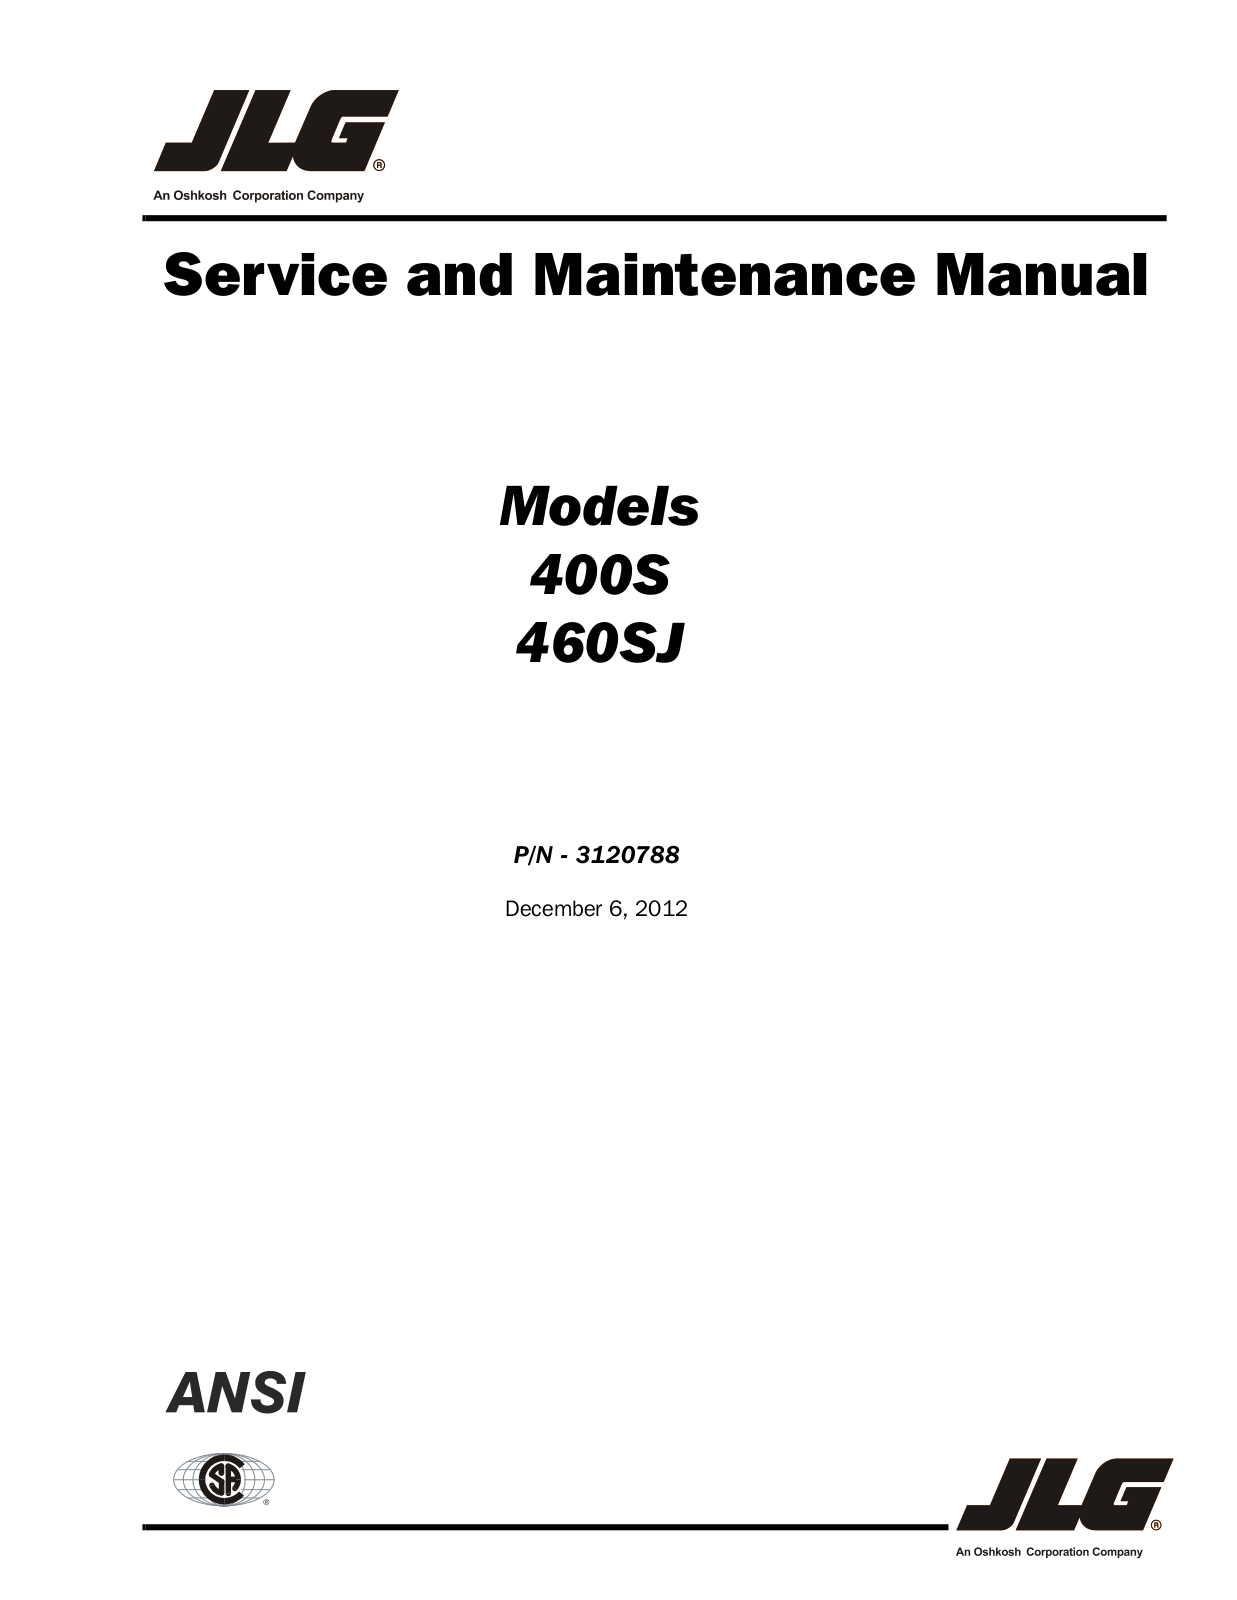 JLG 460SJ Service Manual